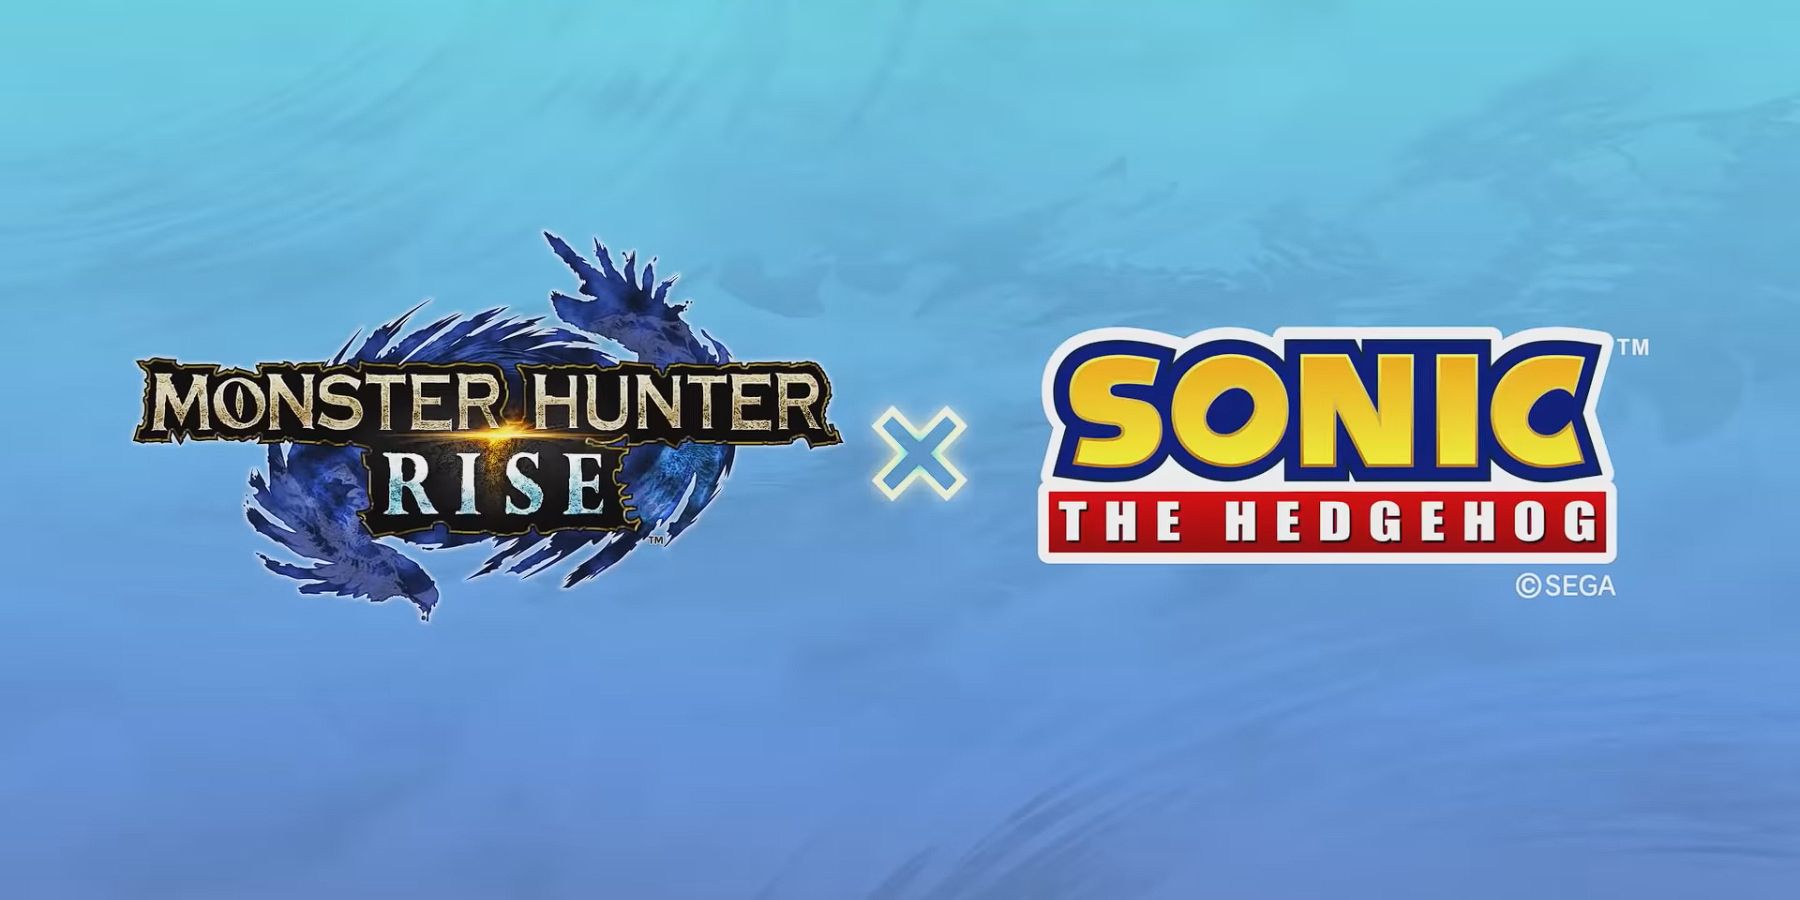 monster hunter rise sonic the hedgehog collab logo